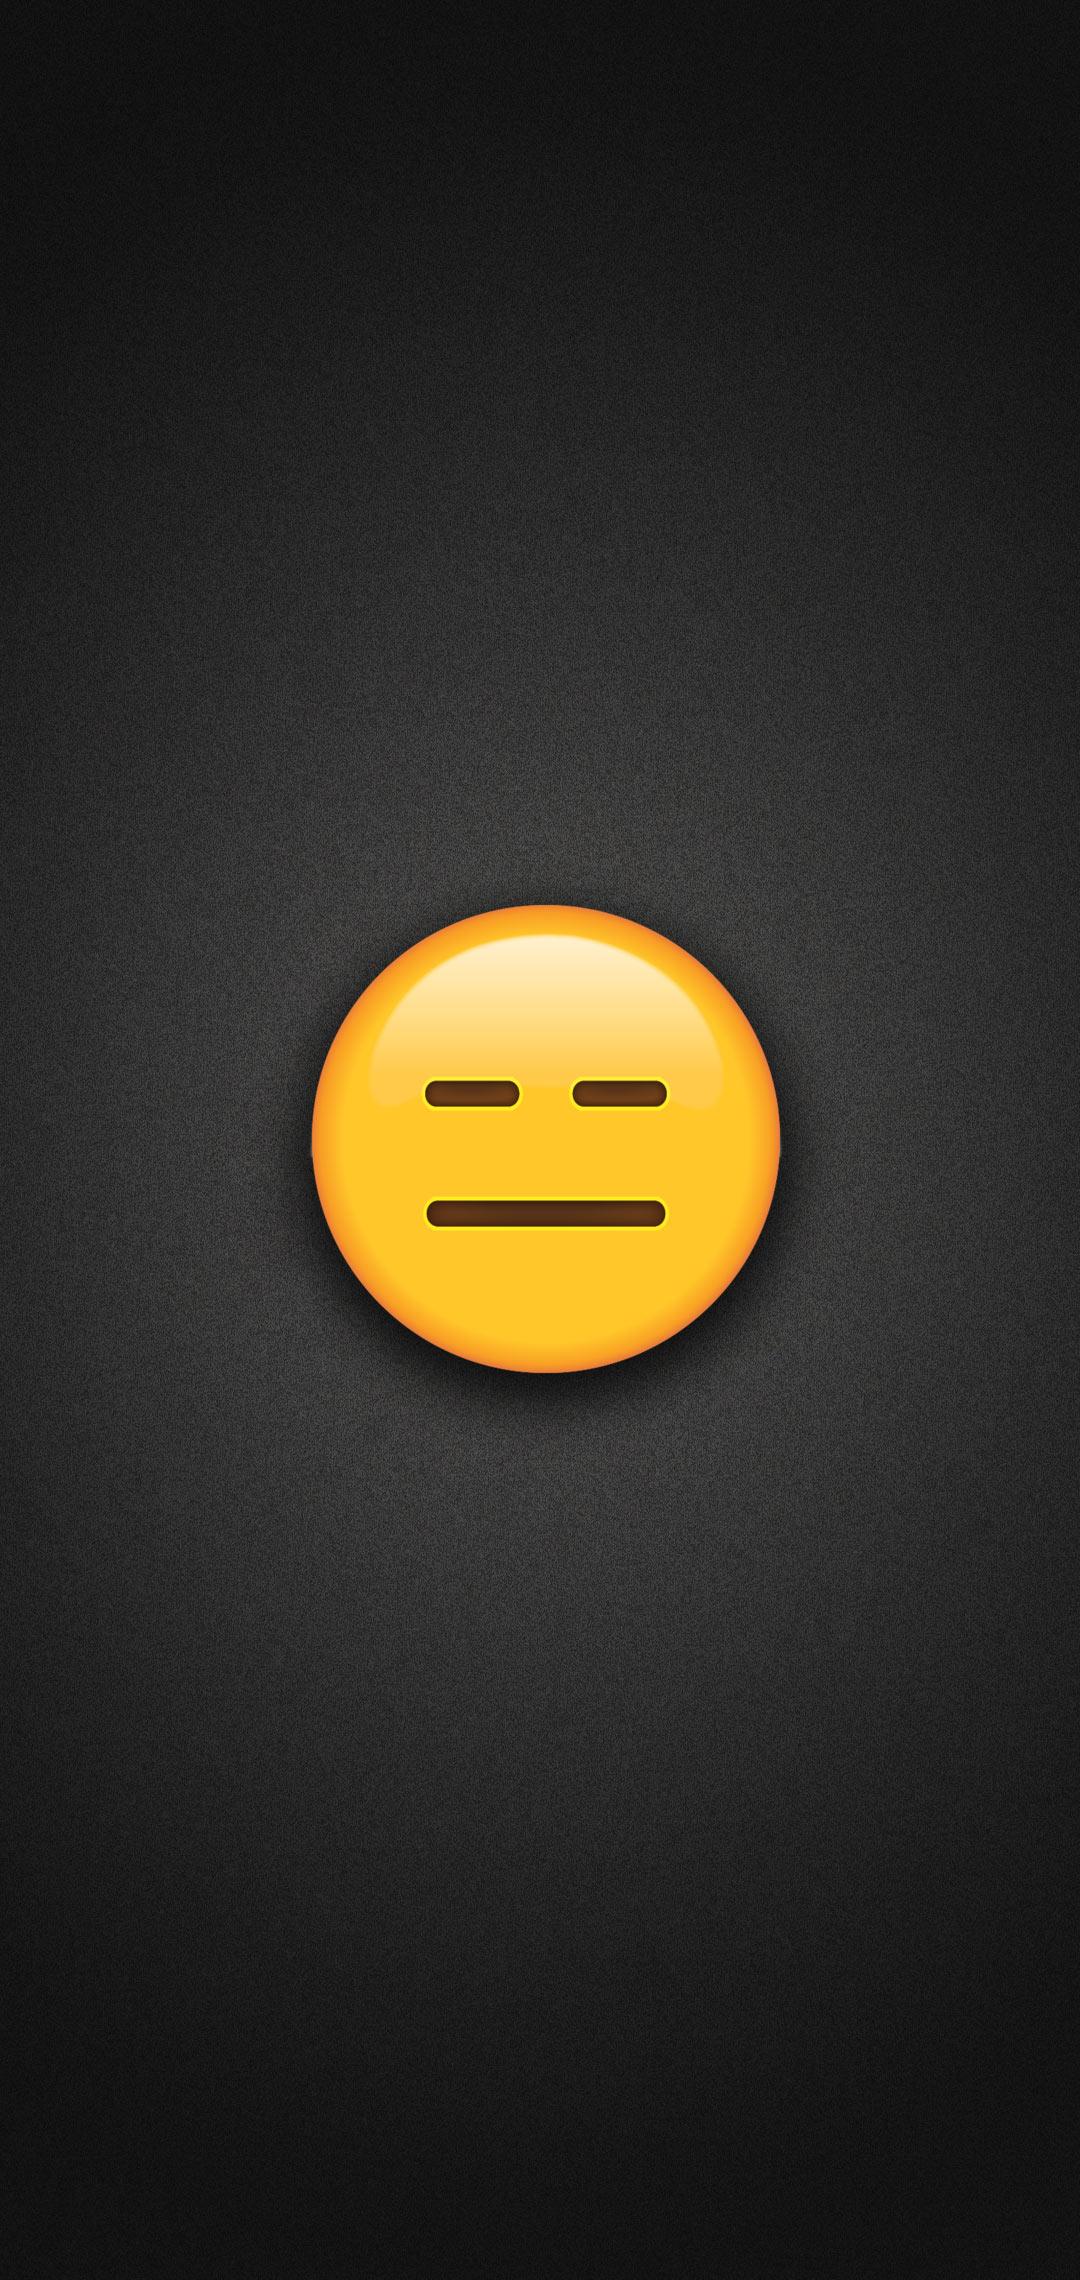 Expressionless Face Emoji Phone Wallpaper